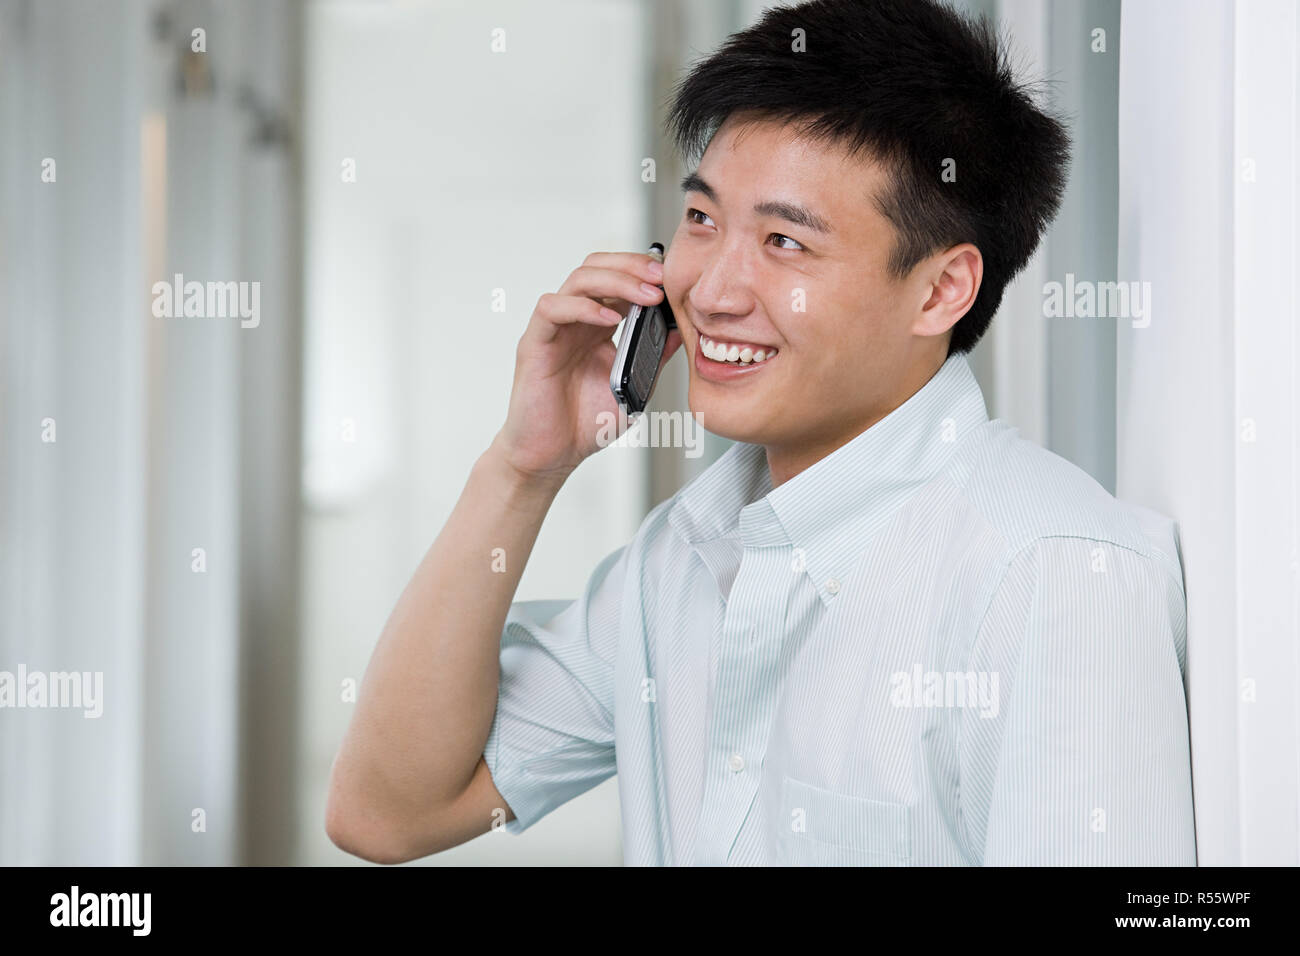 Man on cellphone Stock Photo